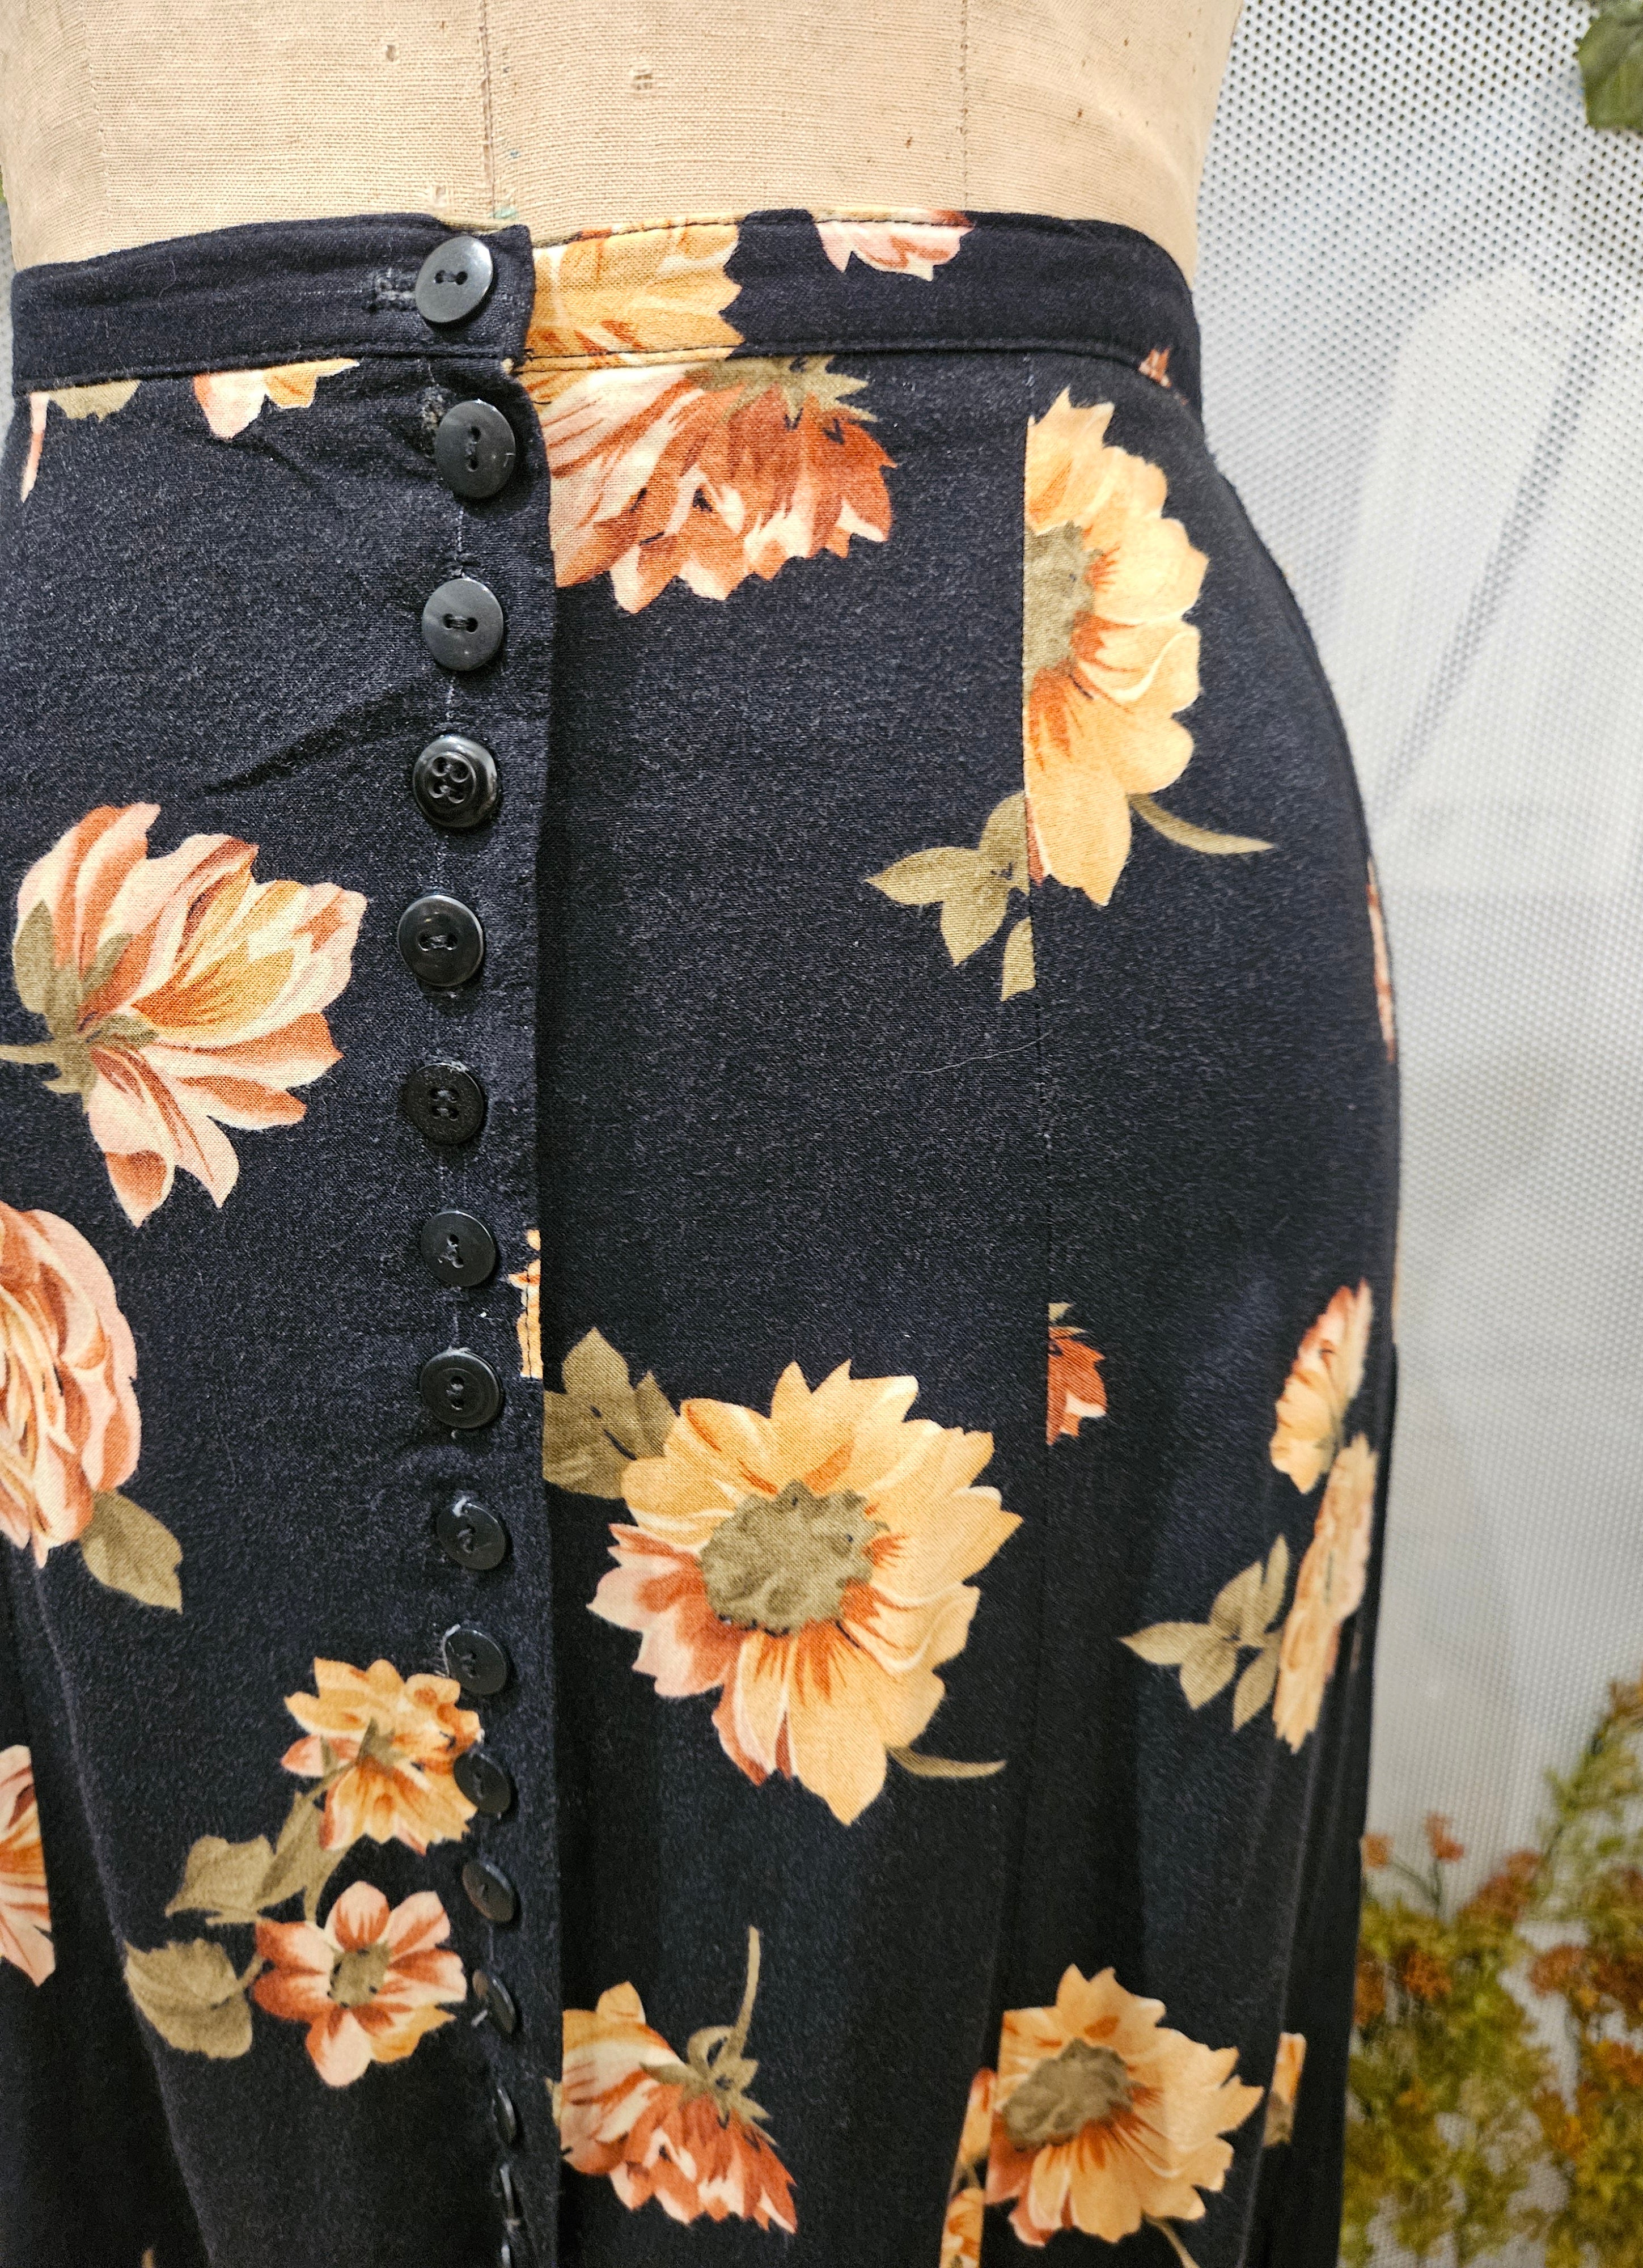 1990’s Floral Skirt